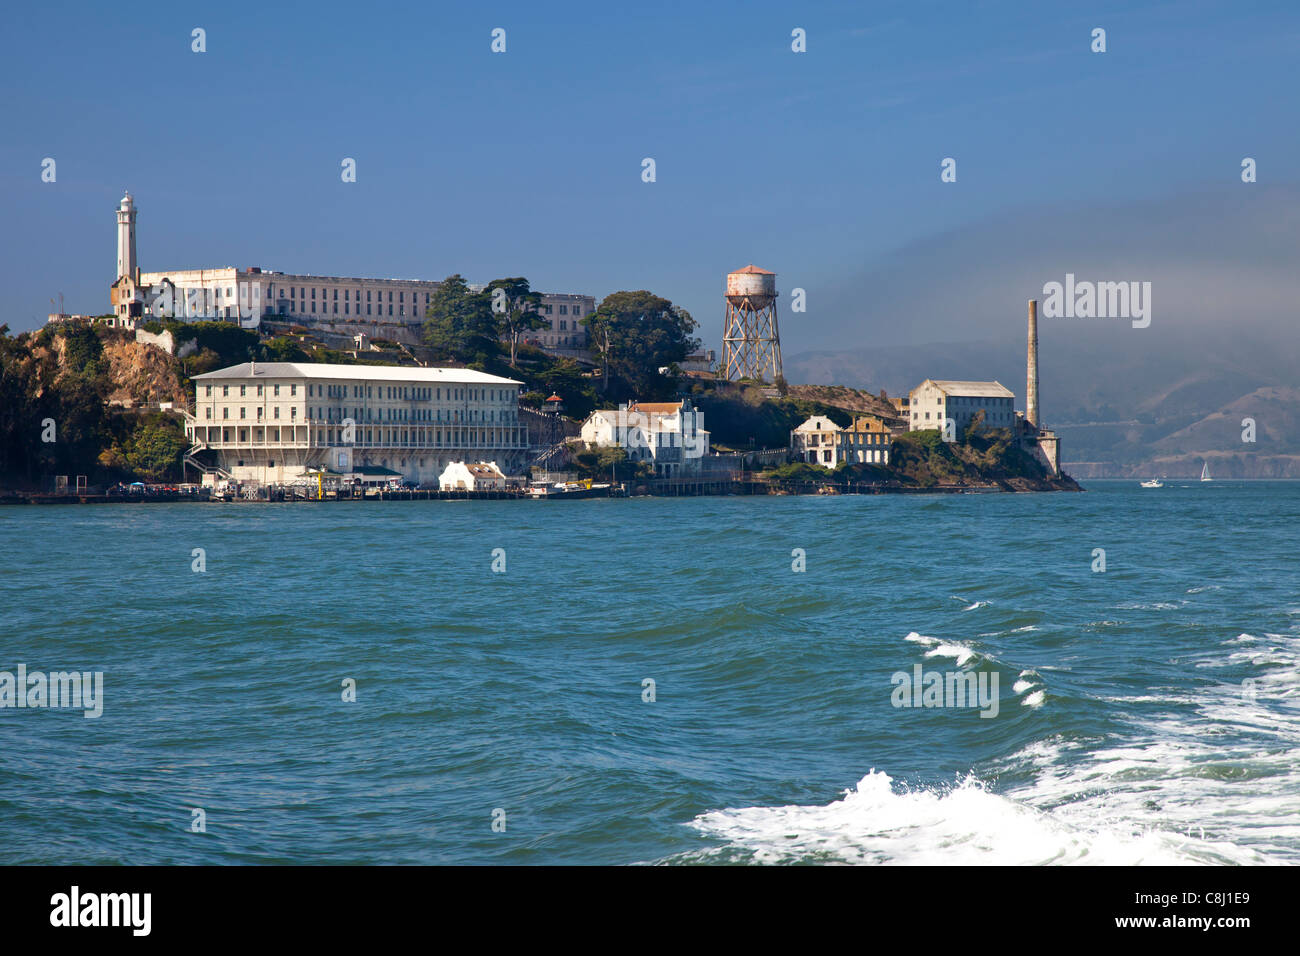 Island prison Alcatraz in San Francisco Bay, California USA Stock Photo